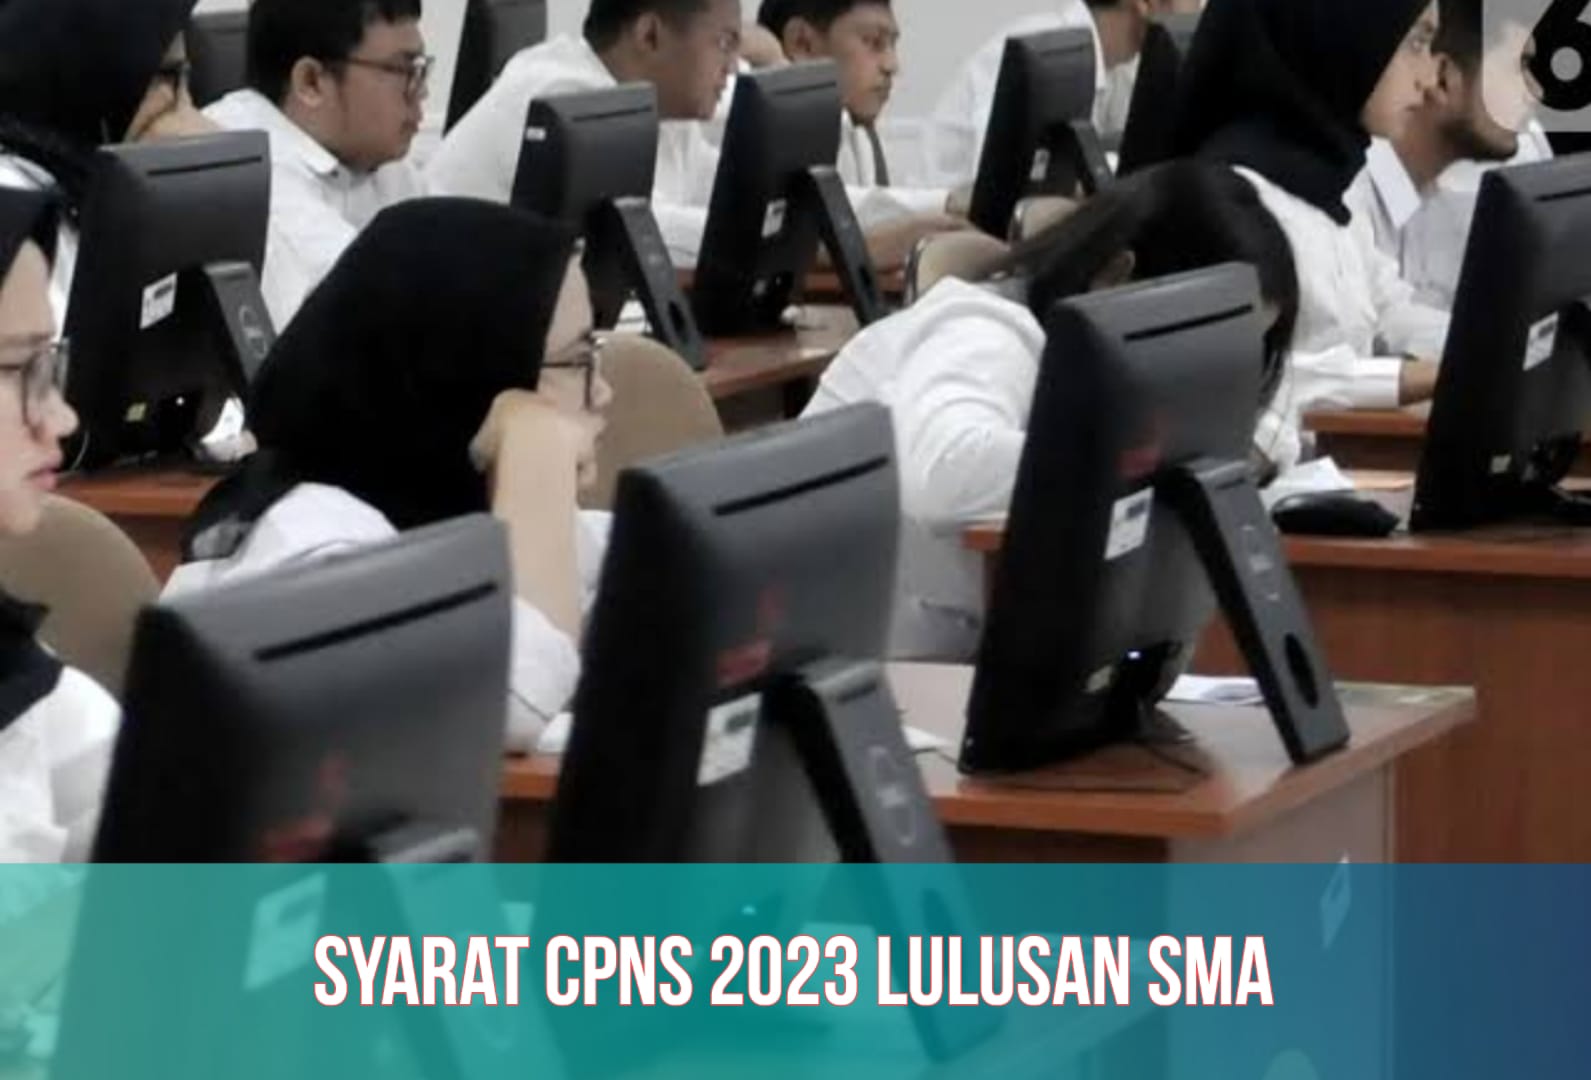 Syarat CPNS 2023, Lulusan SMA dan Sarjana Bisa Daftar, Cek Segera!